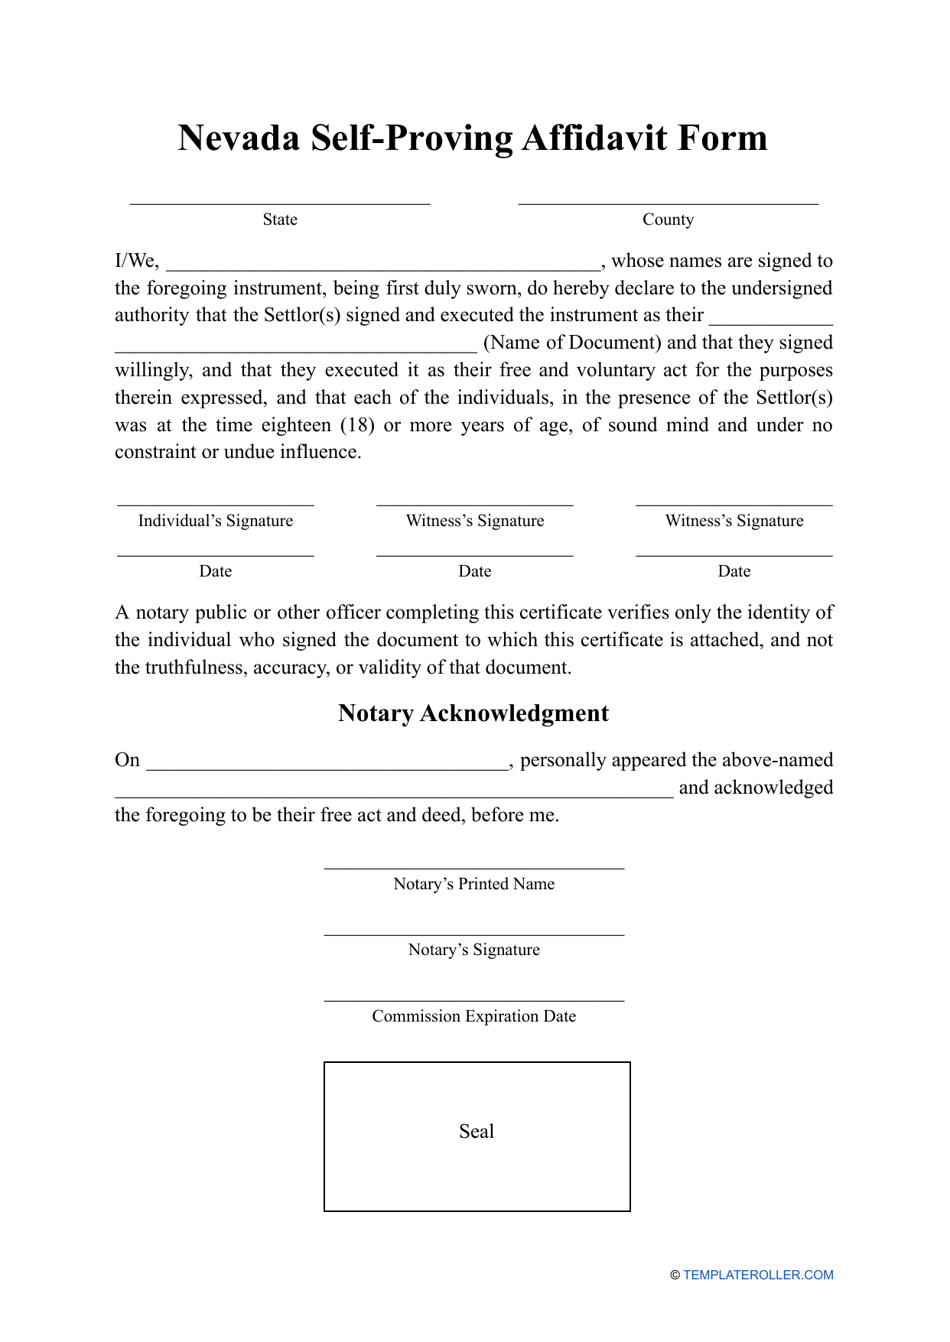 Self-proving Affidavit Form - Nevada, Page 1